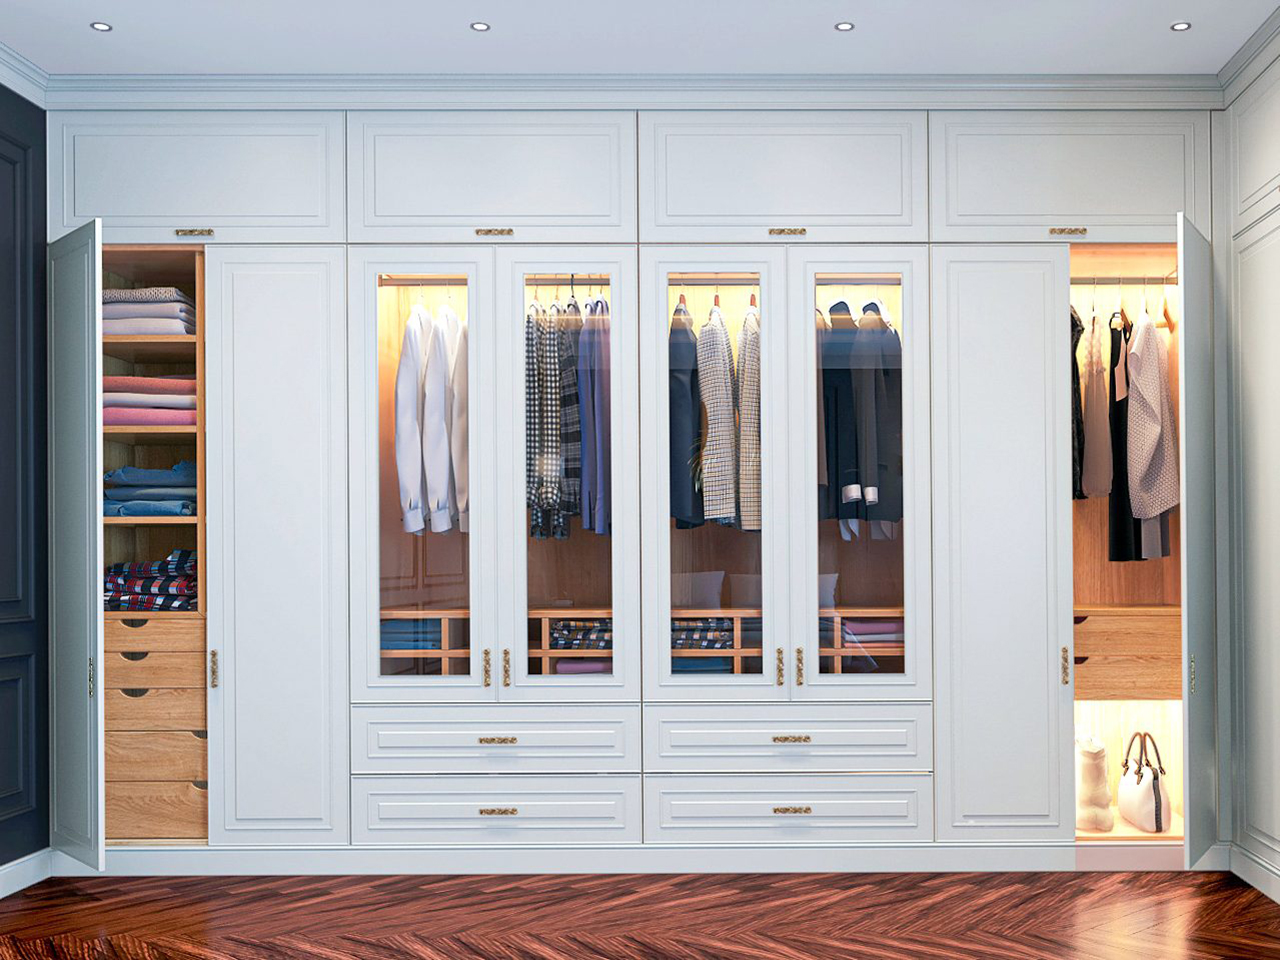 Dressing Room - A Smart and Elegant Storage Solution